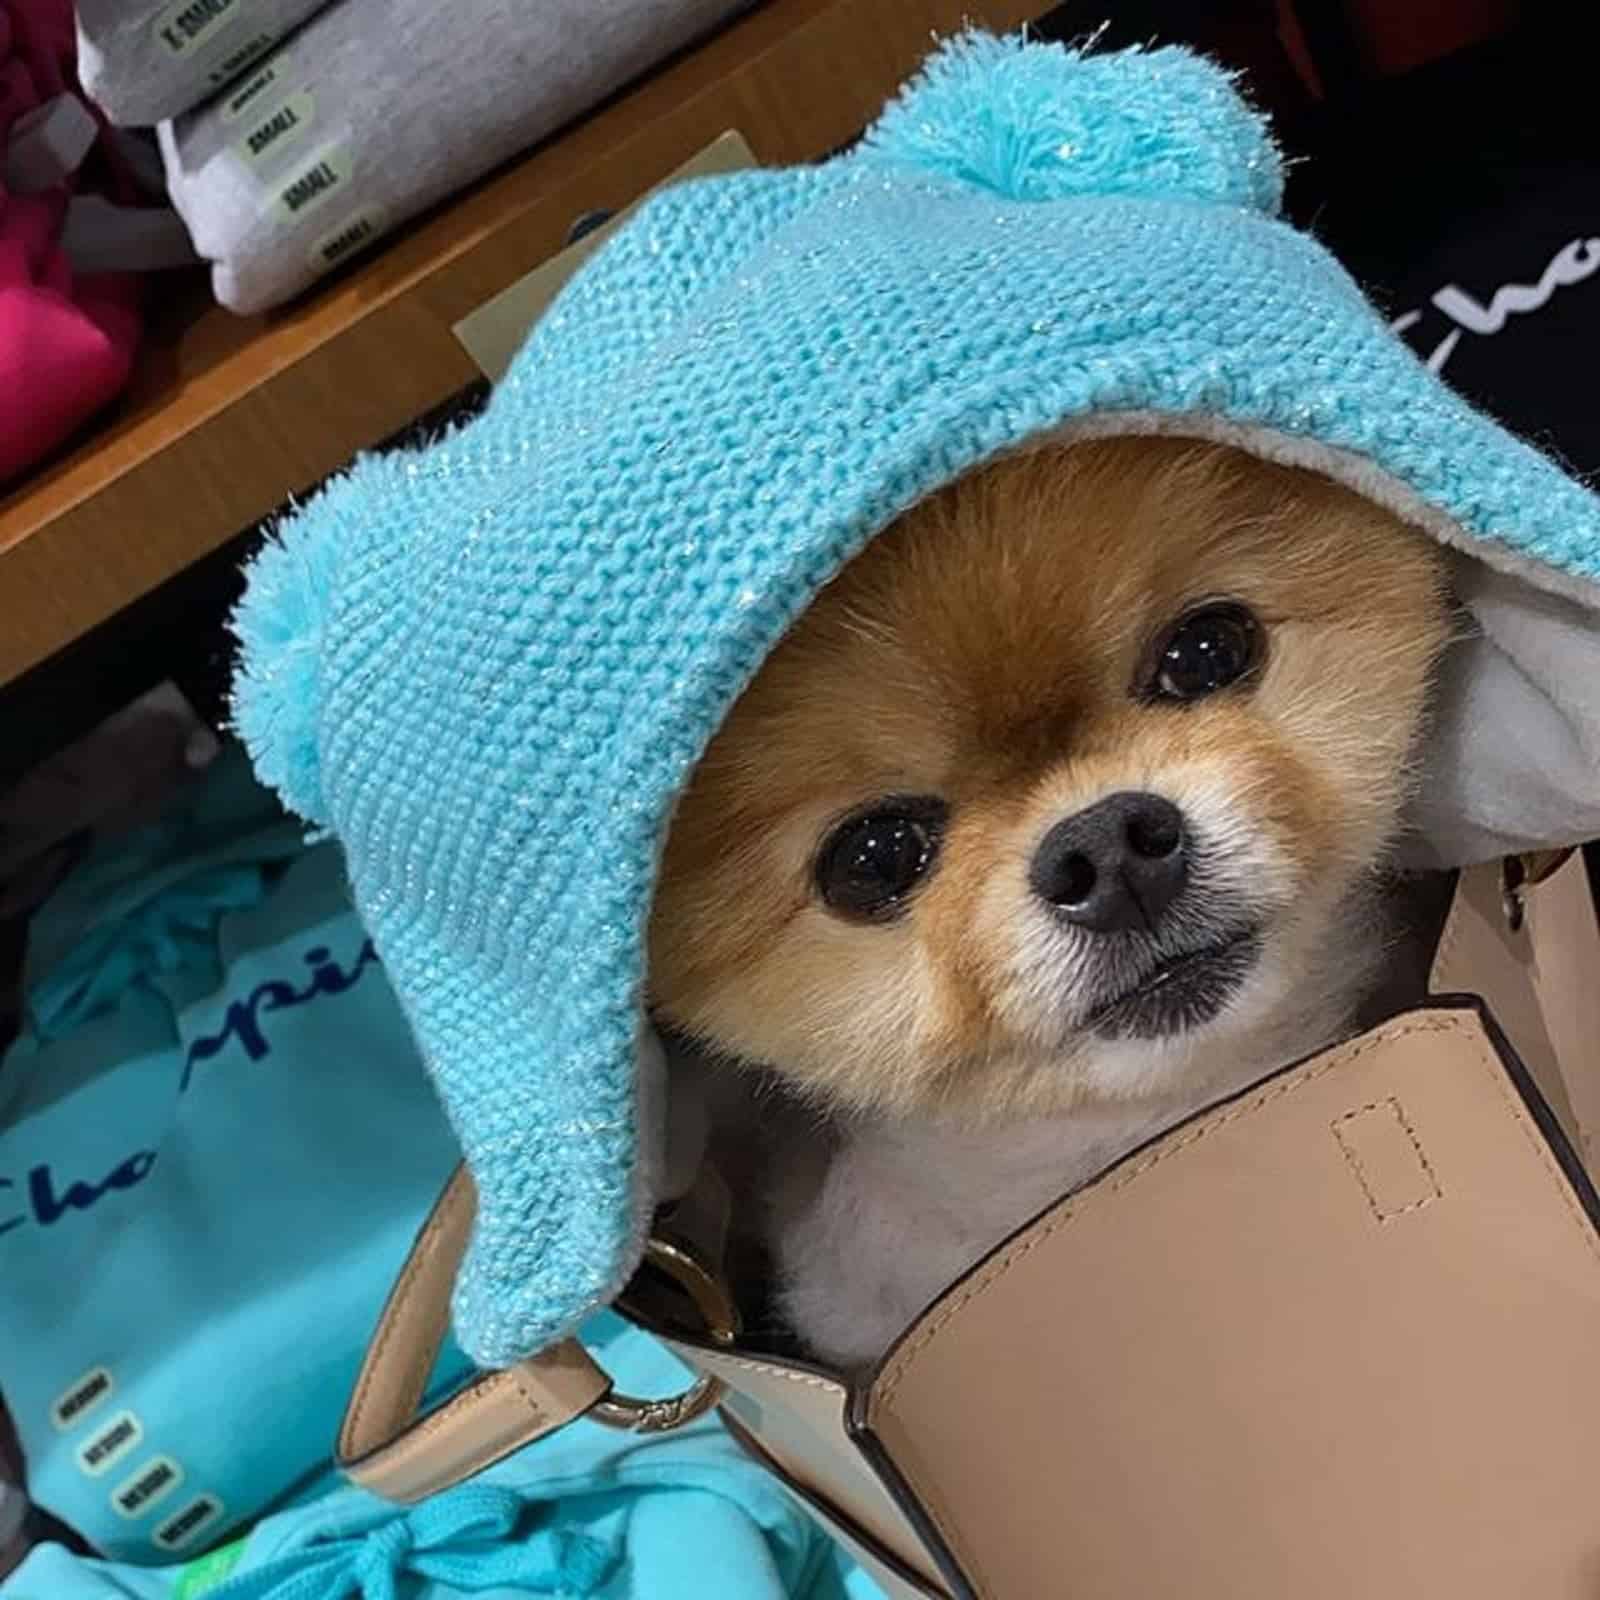 cute dog wearing a hat sitting in a purse